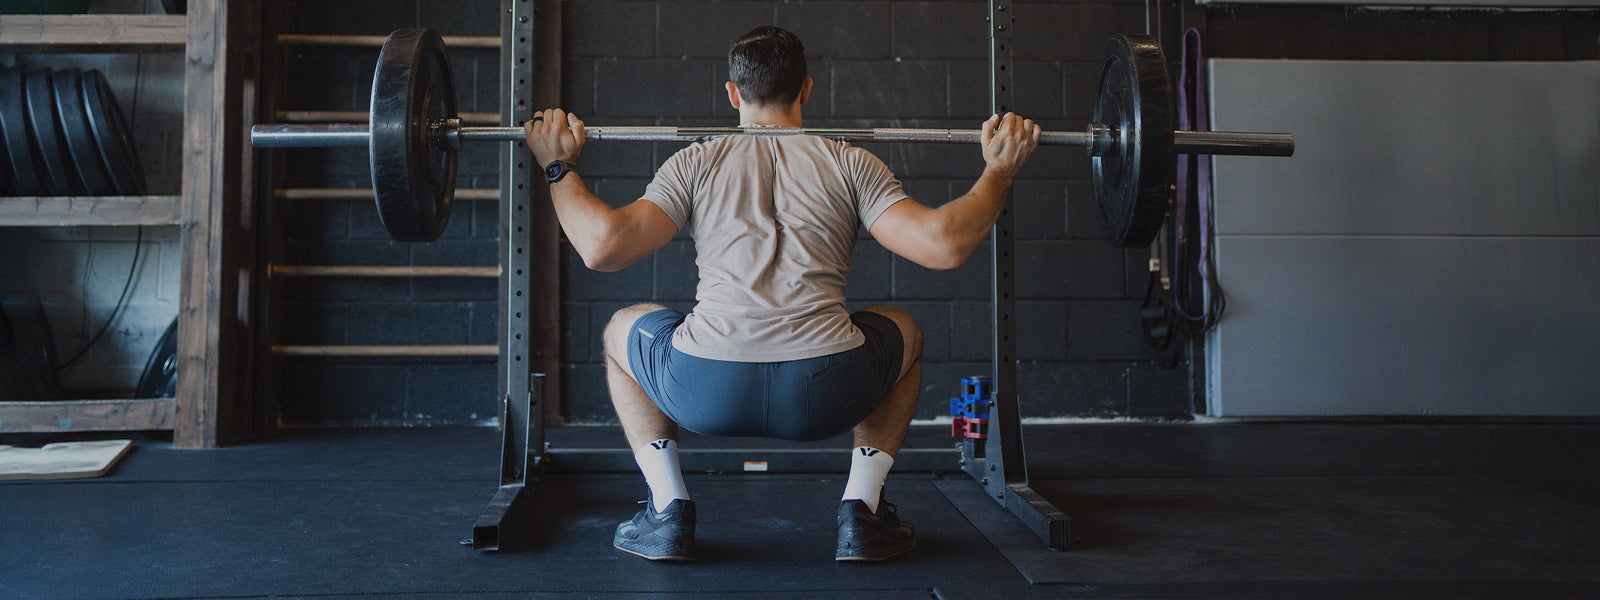 Men's Fitness Socks header image, man lifting weights